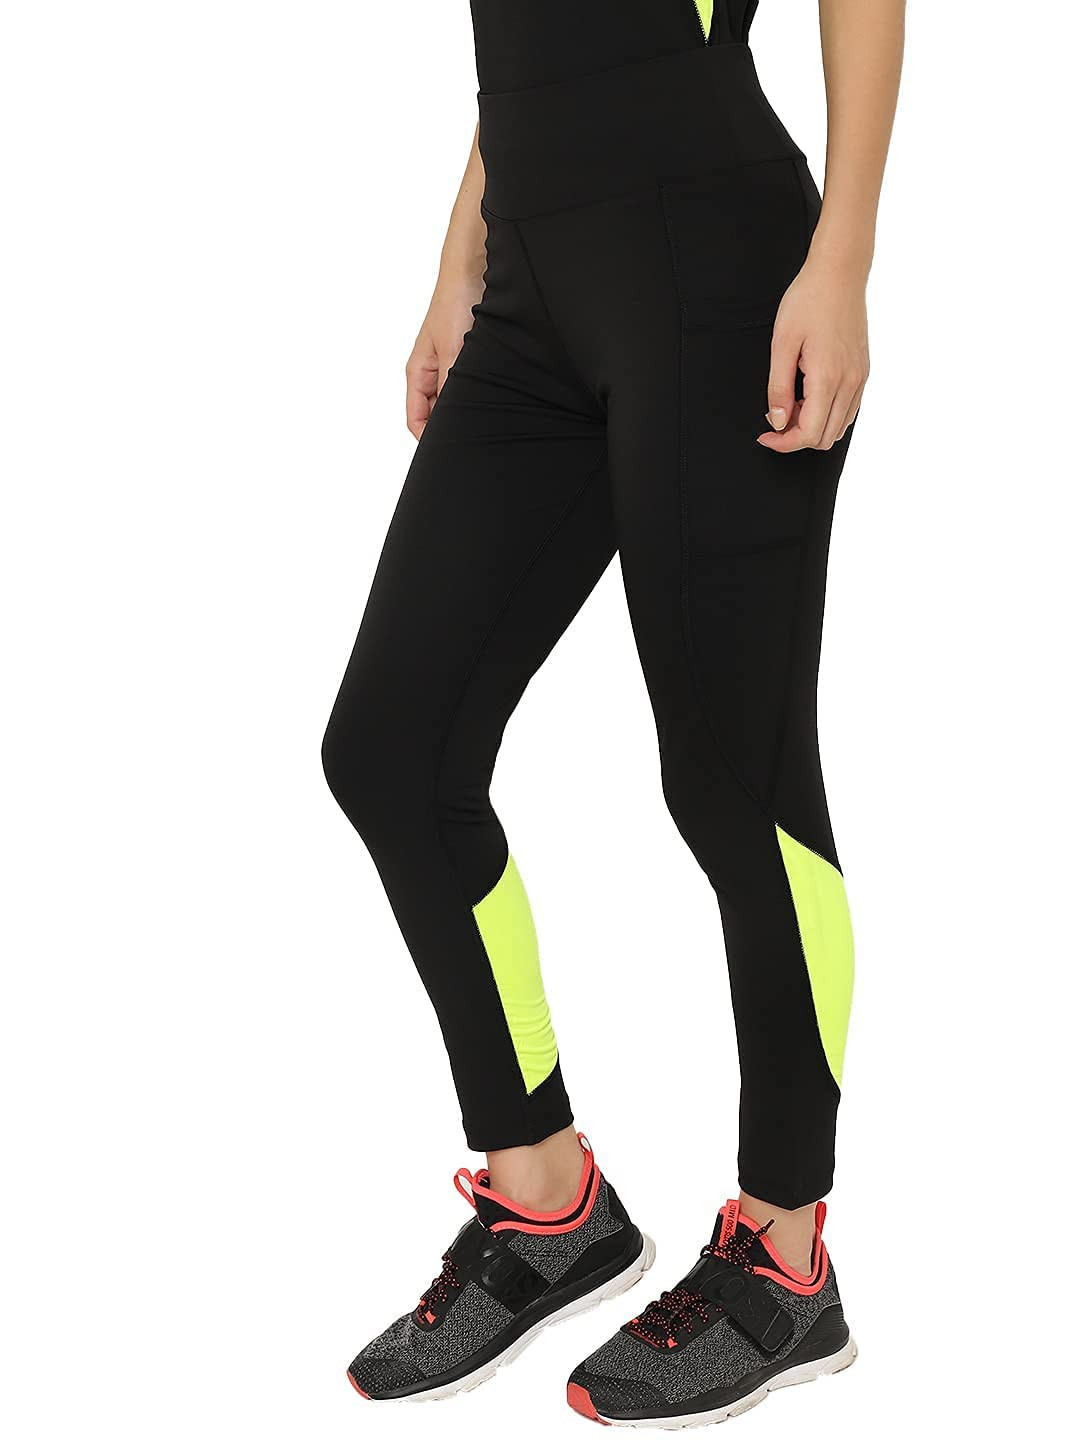 chkokko women skinny fit yoga track pants stretchable gym legging tights black size msize 30 278810693295139 l